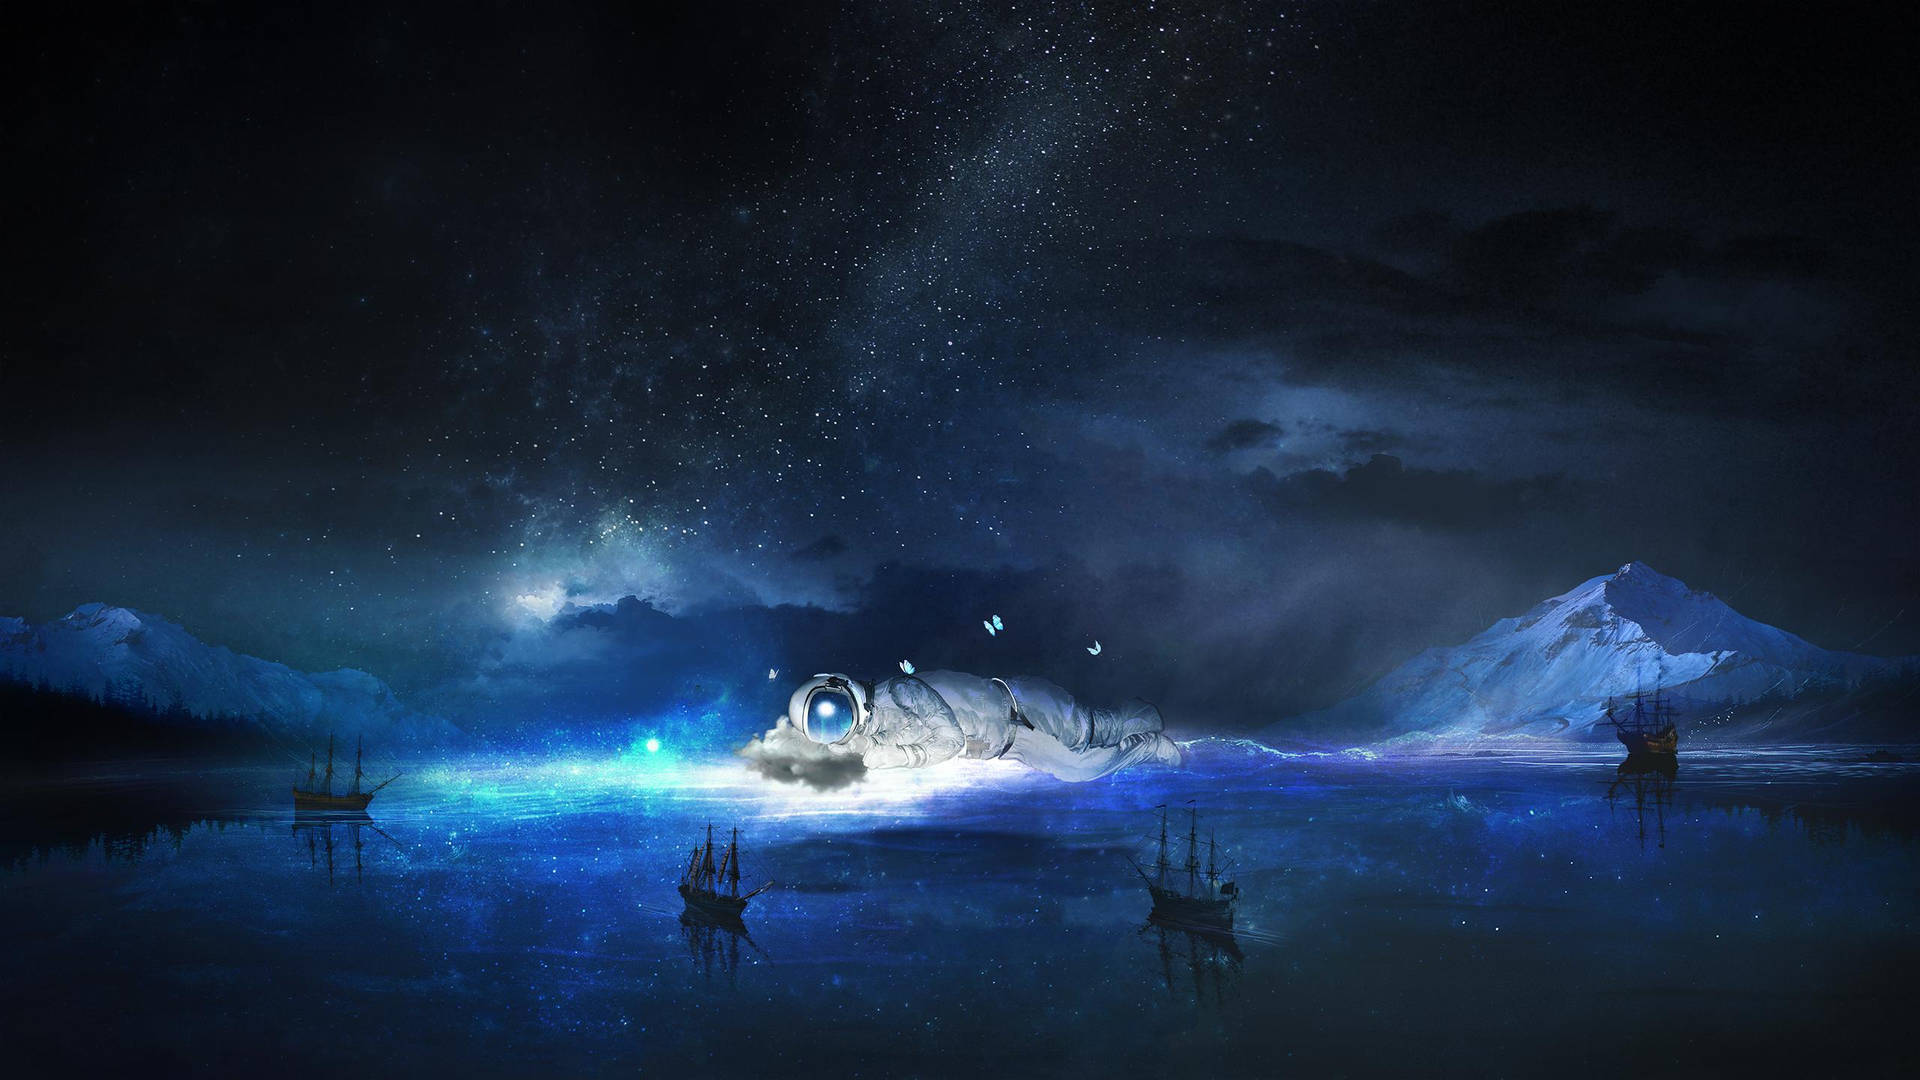 An astronaut drifts away on board a surreal dream boat. Wallpaper